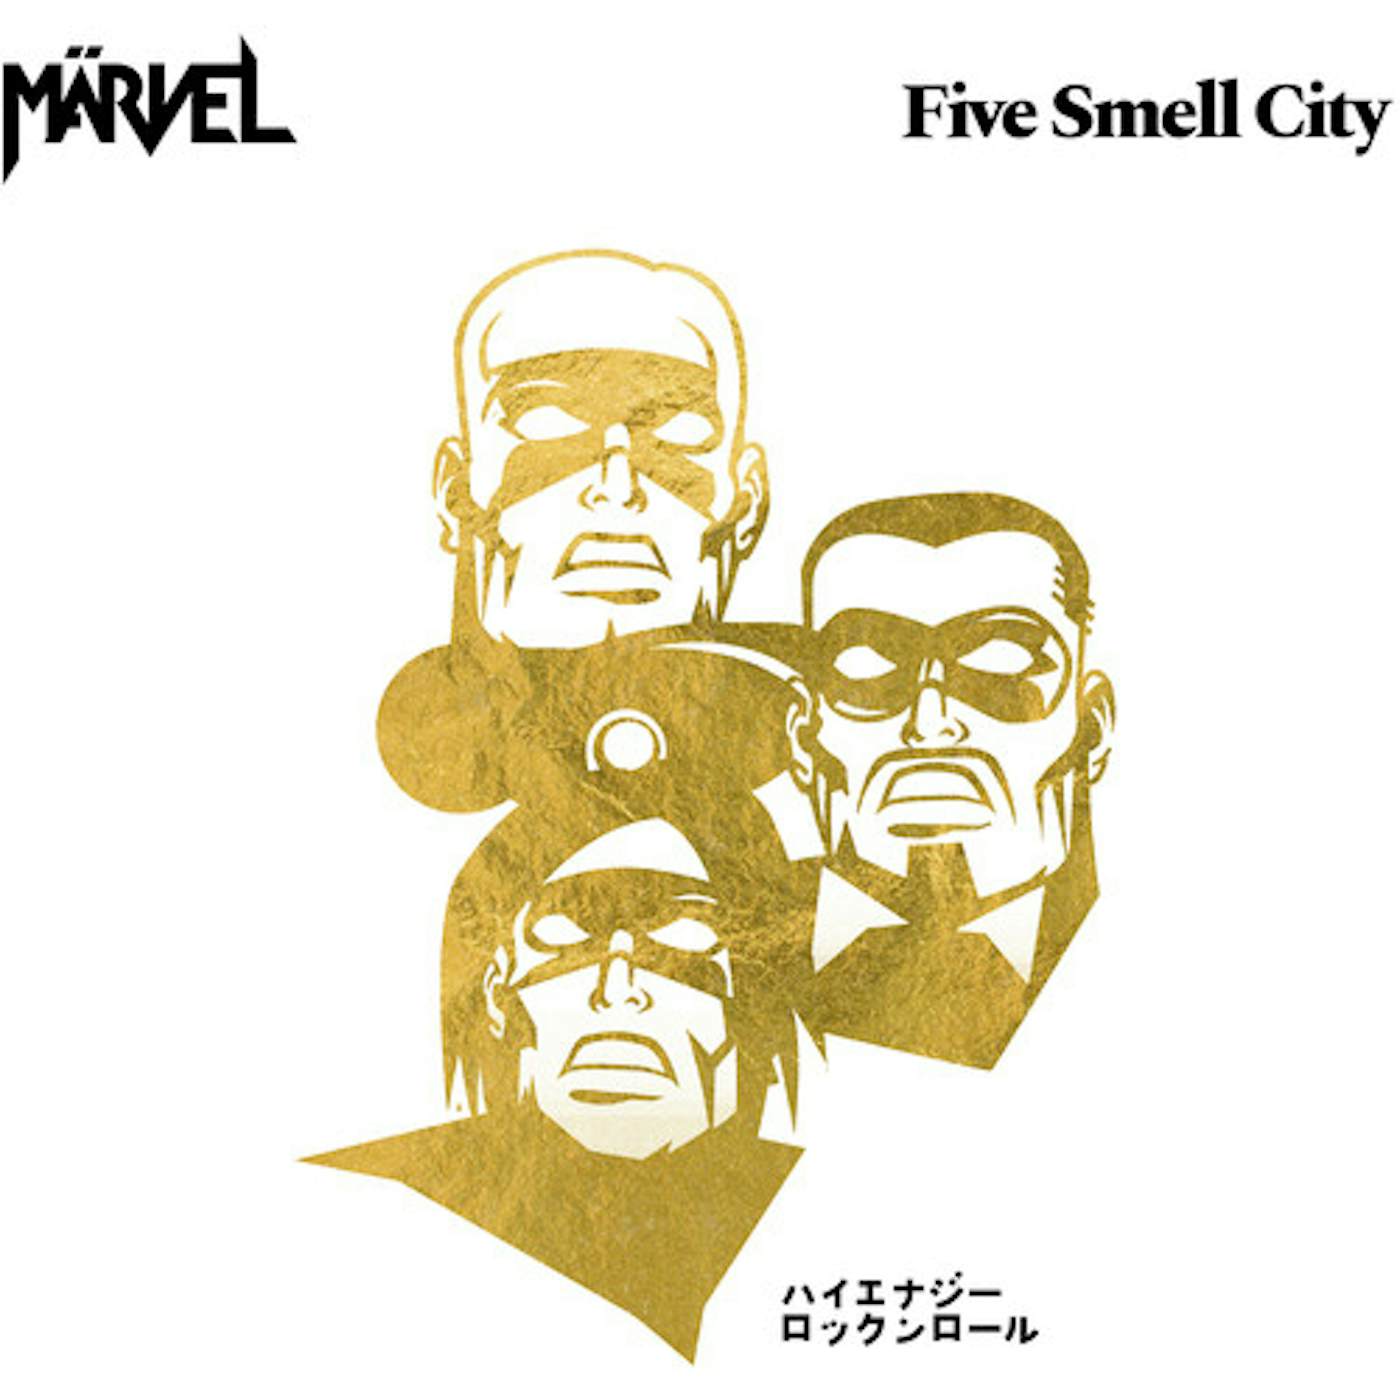 Marvel FIVE SMELL CITY (DELUXE/PINK VINYL) Vinyl Record